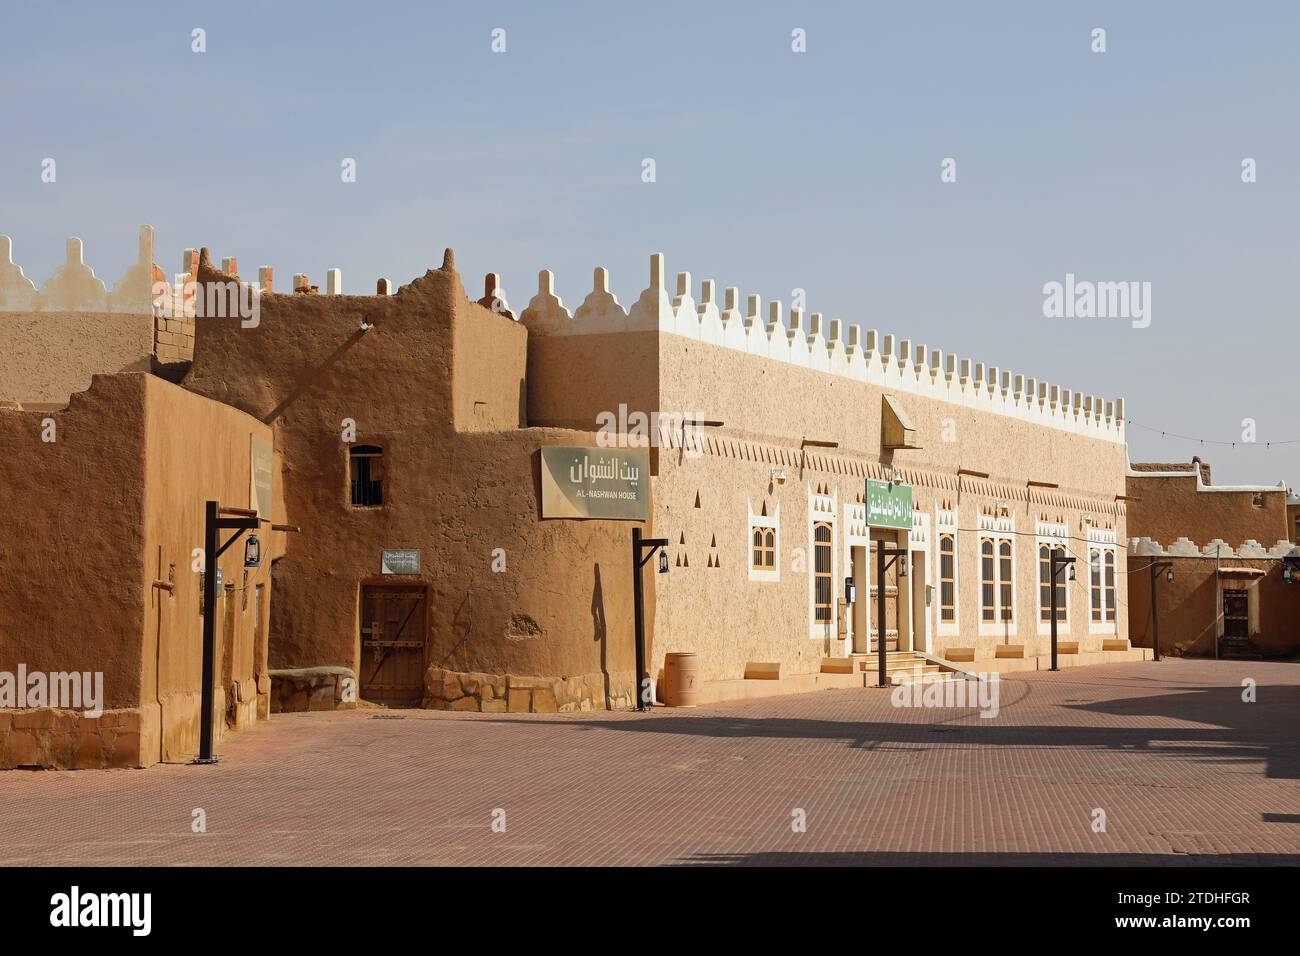 Ushaiger Heritage Village in Saudi Arabia Stock Photo